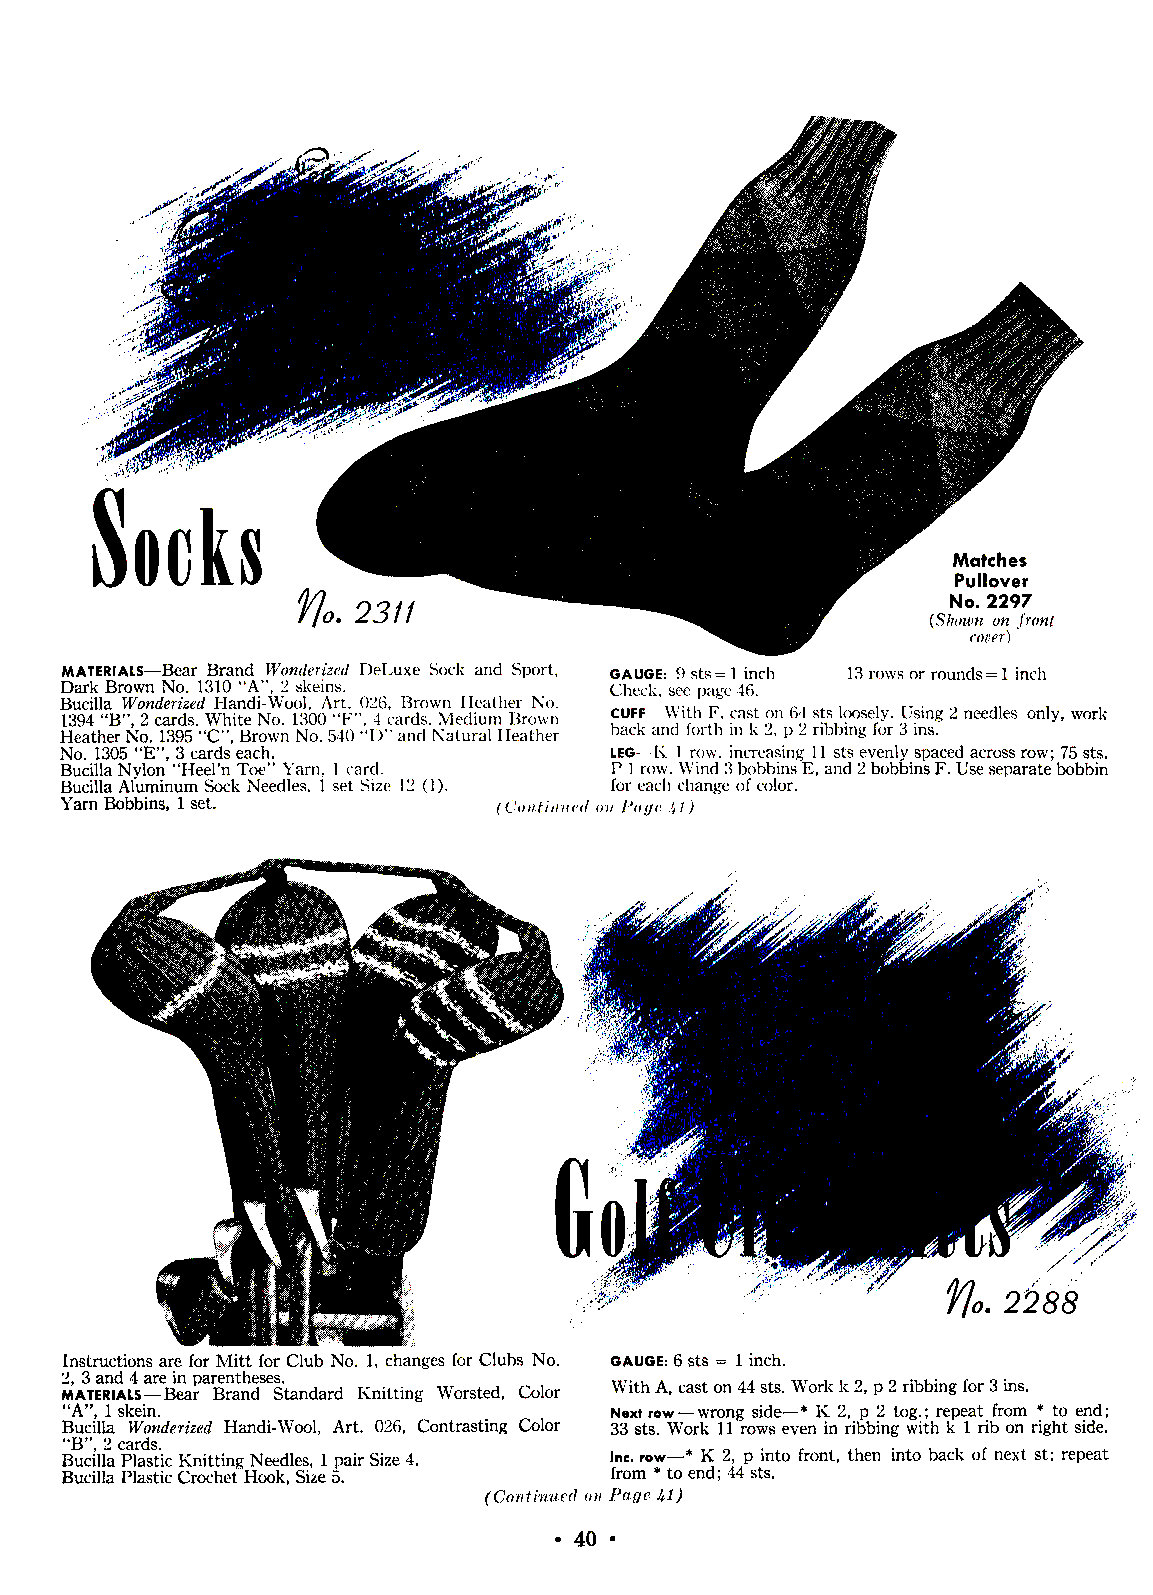 Vintage Men's Knitting Patterns Socks and Golf Mitts